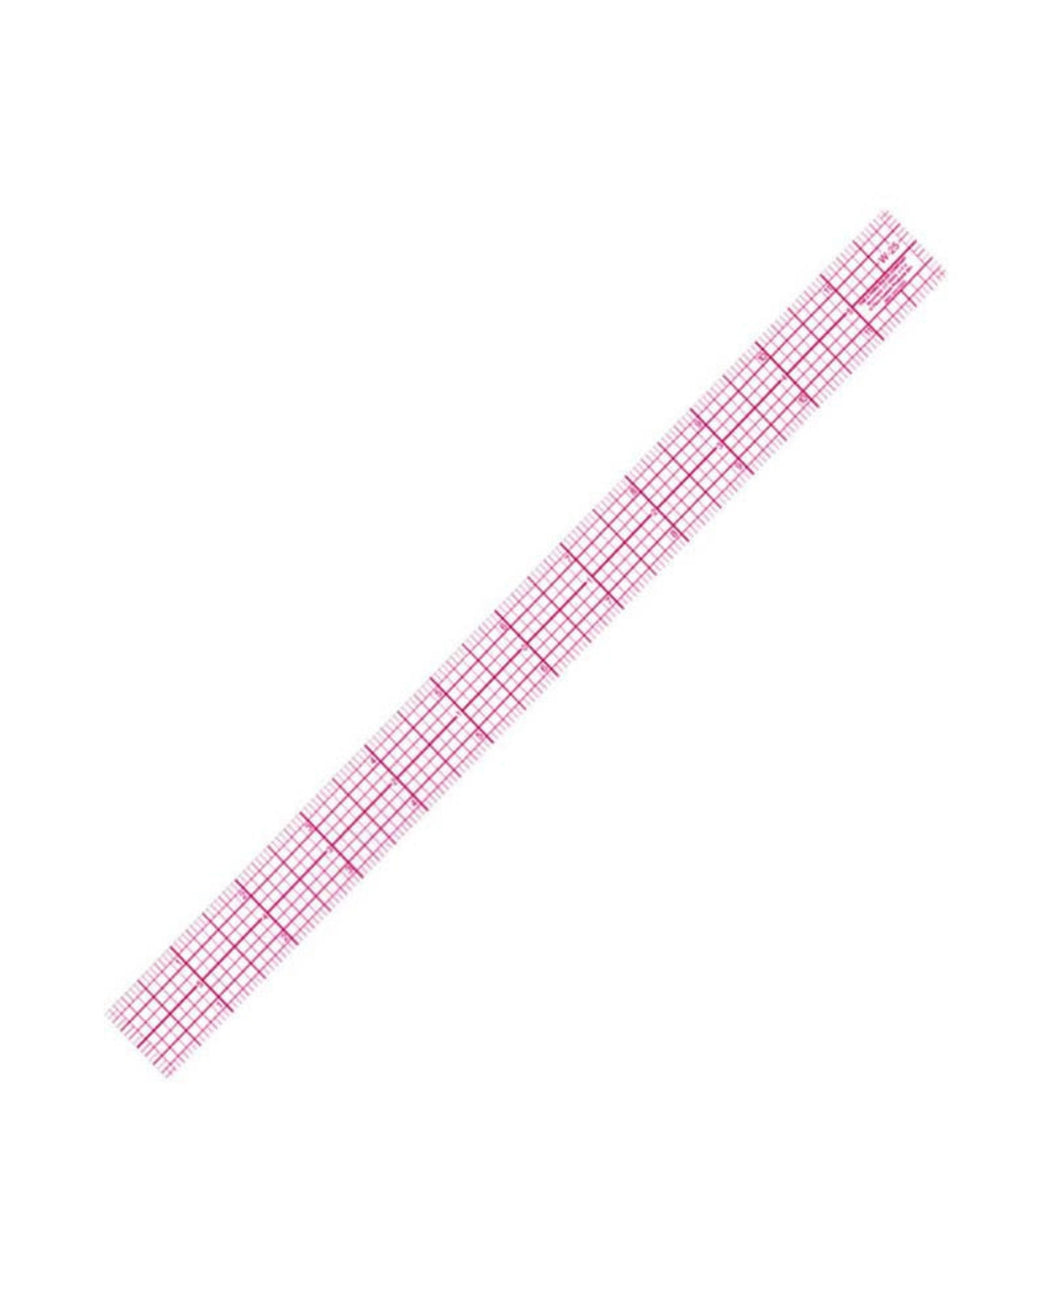 Clear Graph Ruler - Zipper and Thread